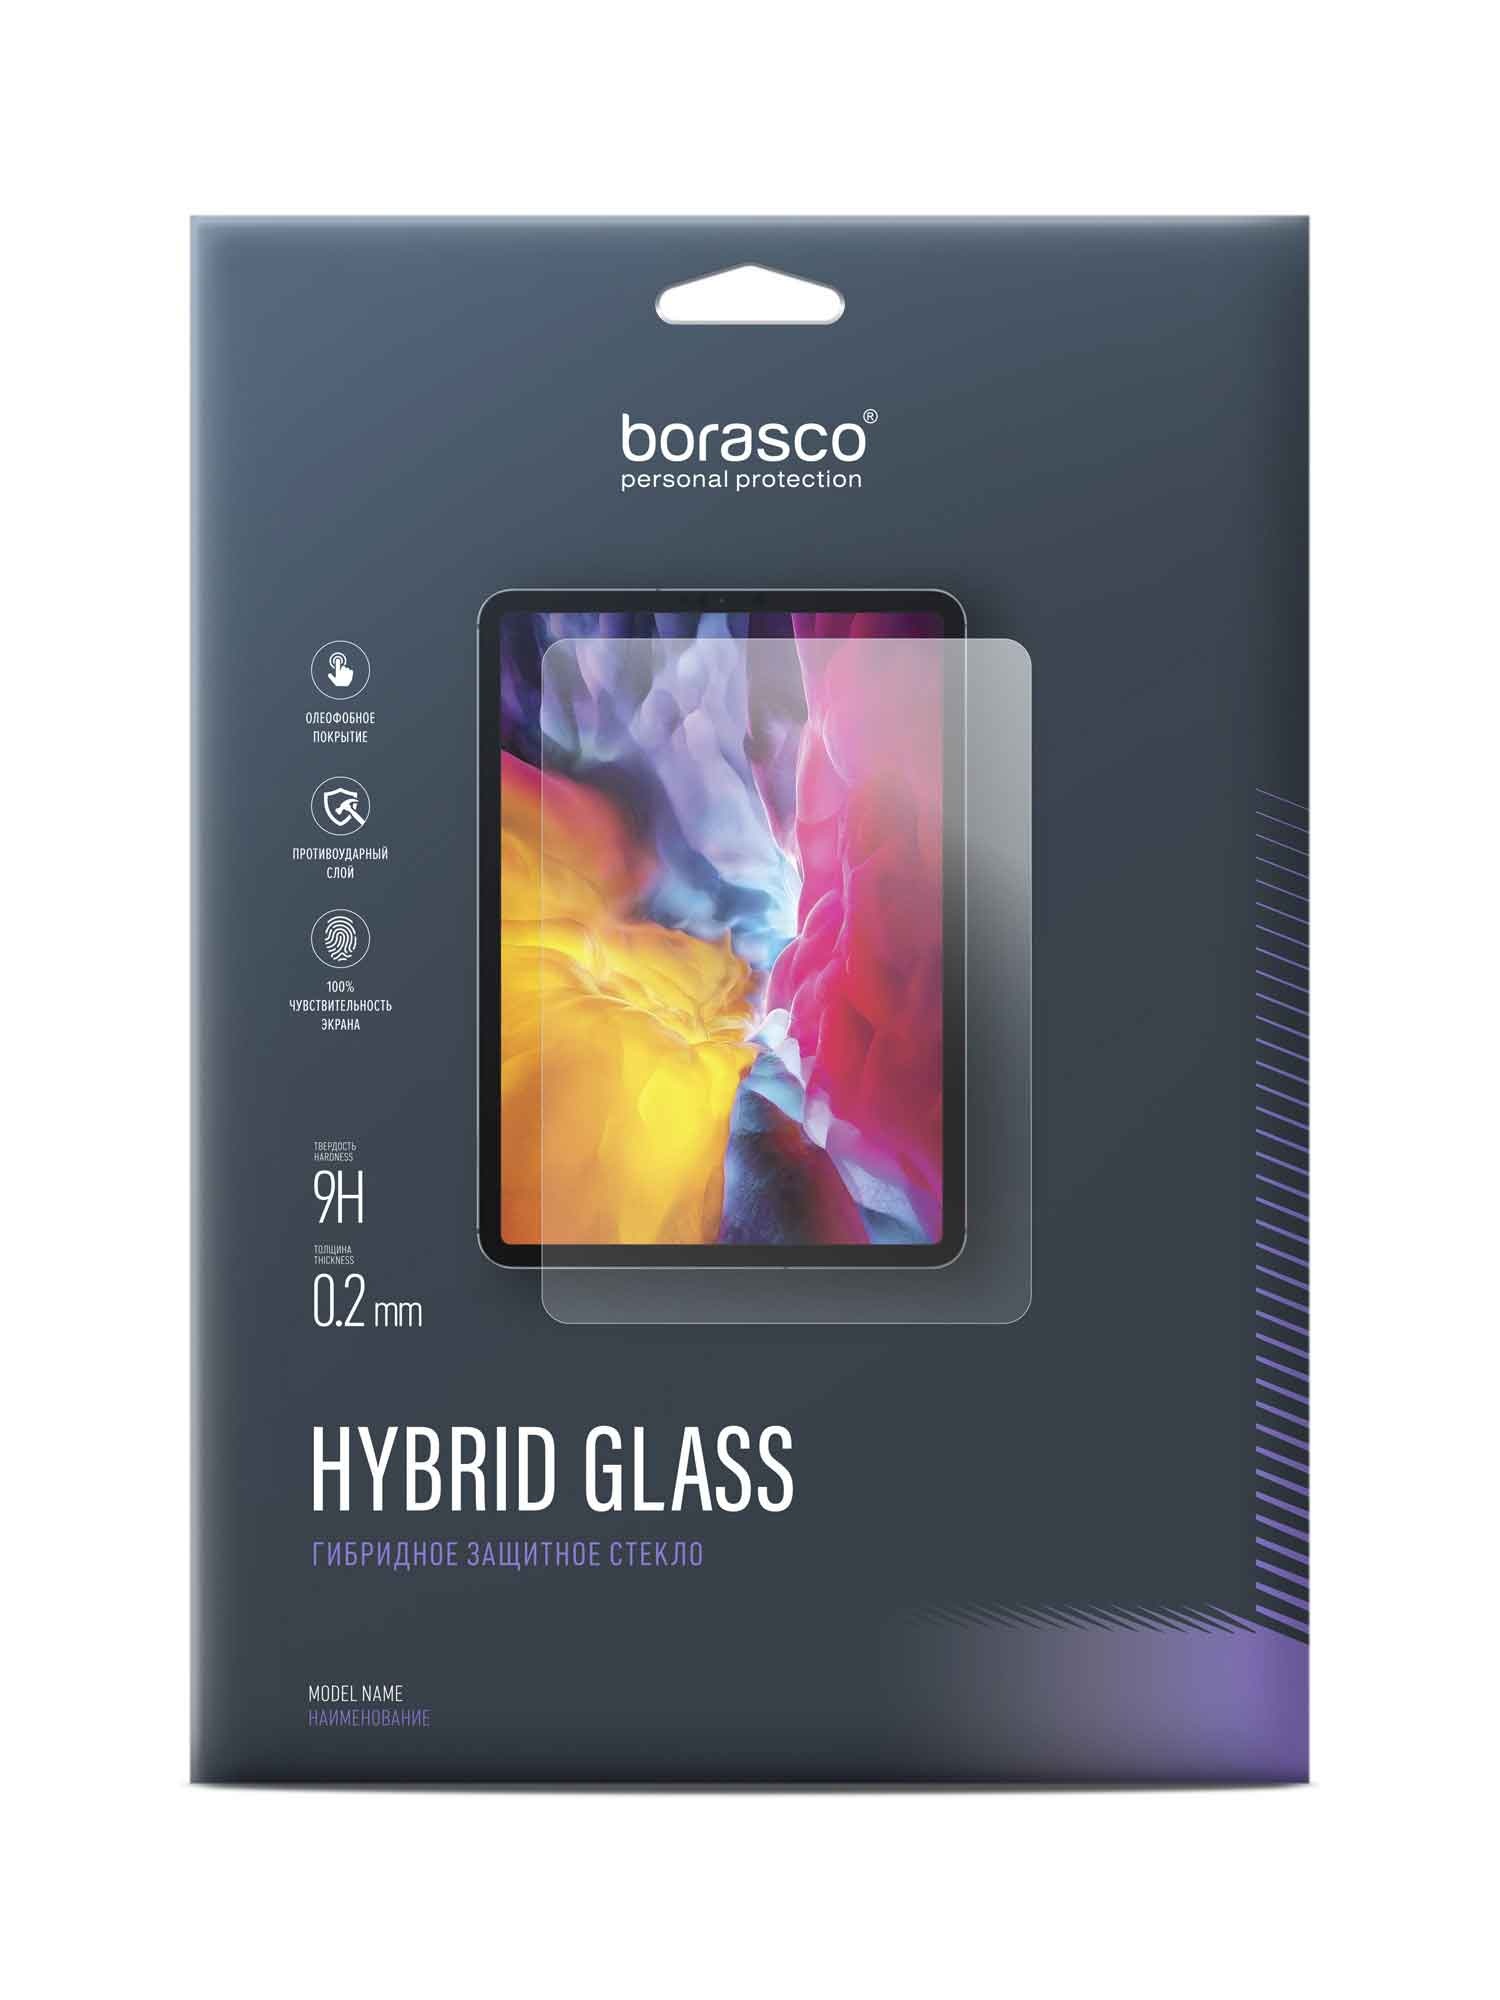 Защитное стекло BoraSCO Hybrid Glass для Prestigio SmartKids PMT3997 Wi-Fi 7